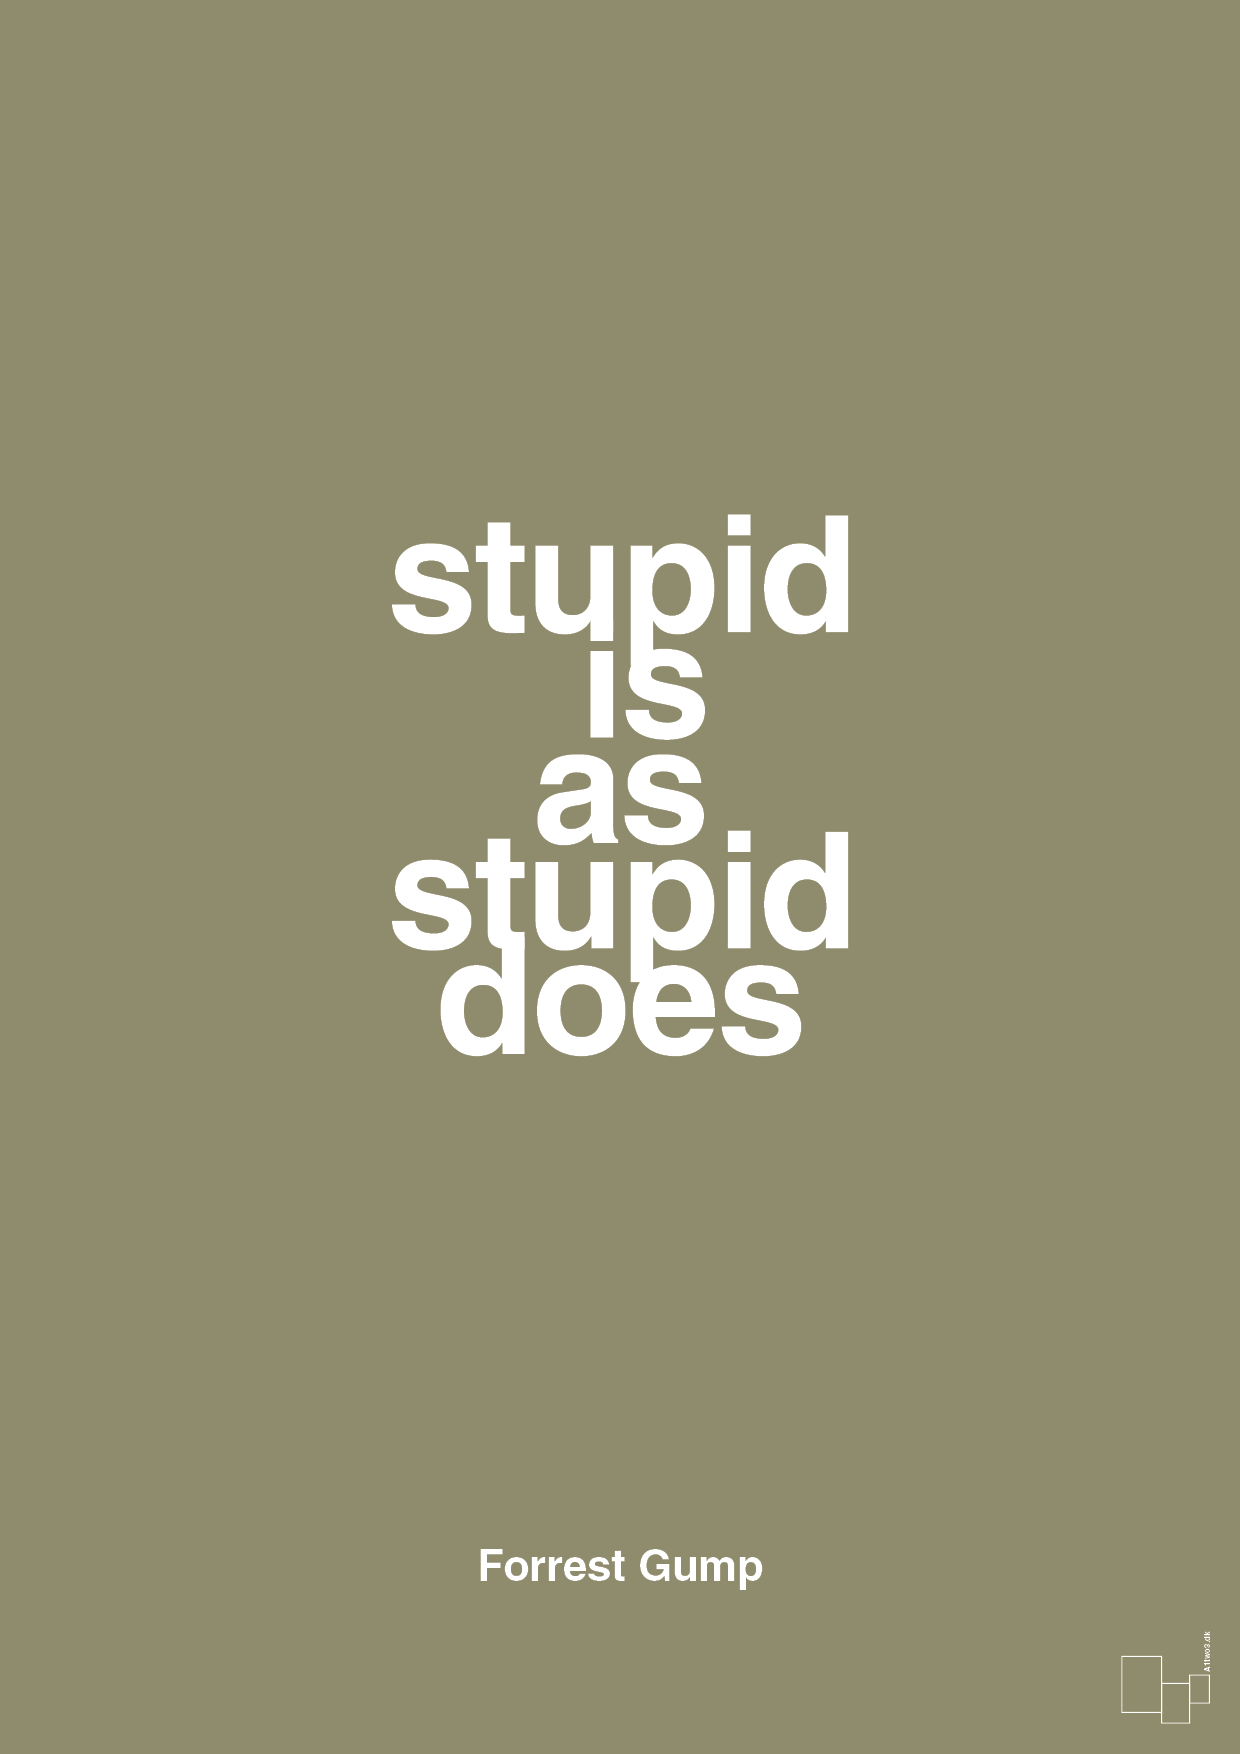 stupid is as stupid does - Plakat med Citater i Misty Forrest